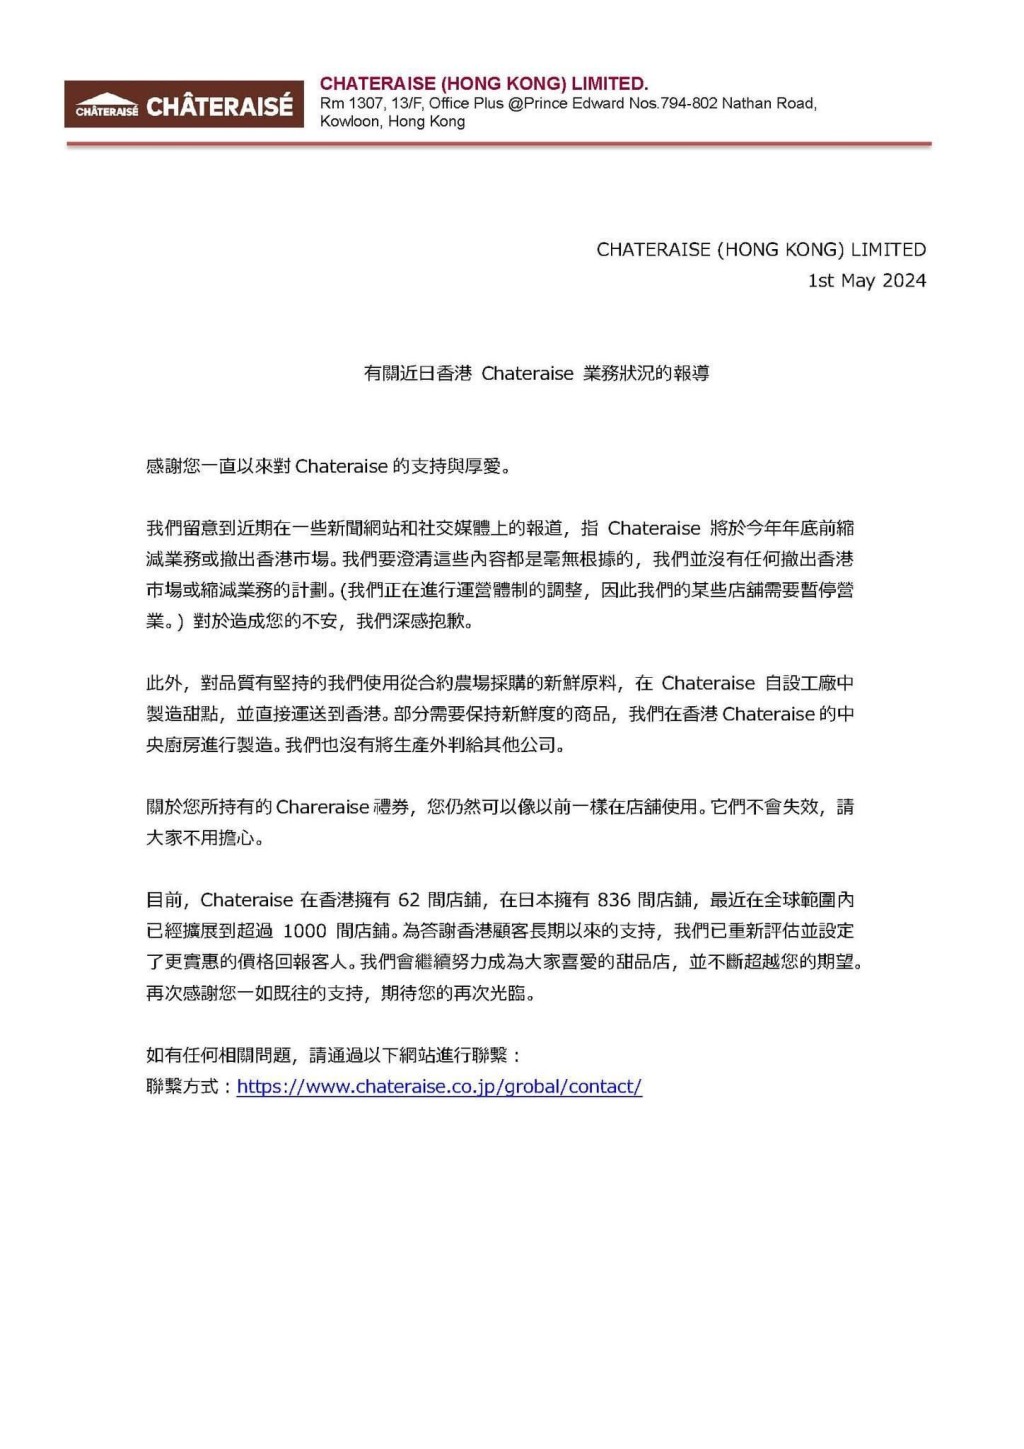 Chateraise公告指，今年年底前縮減業務或撤出香港市場的內容毫無根據。